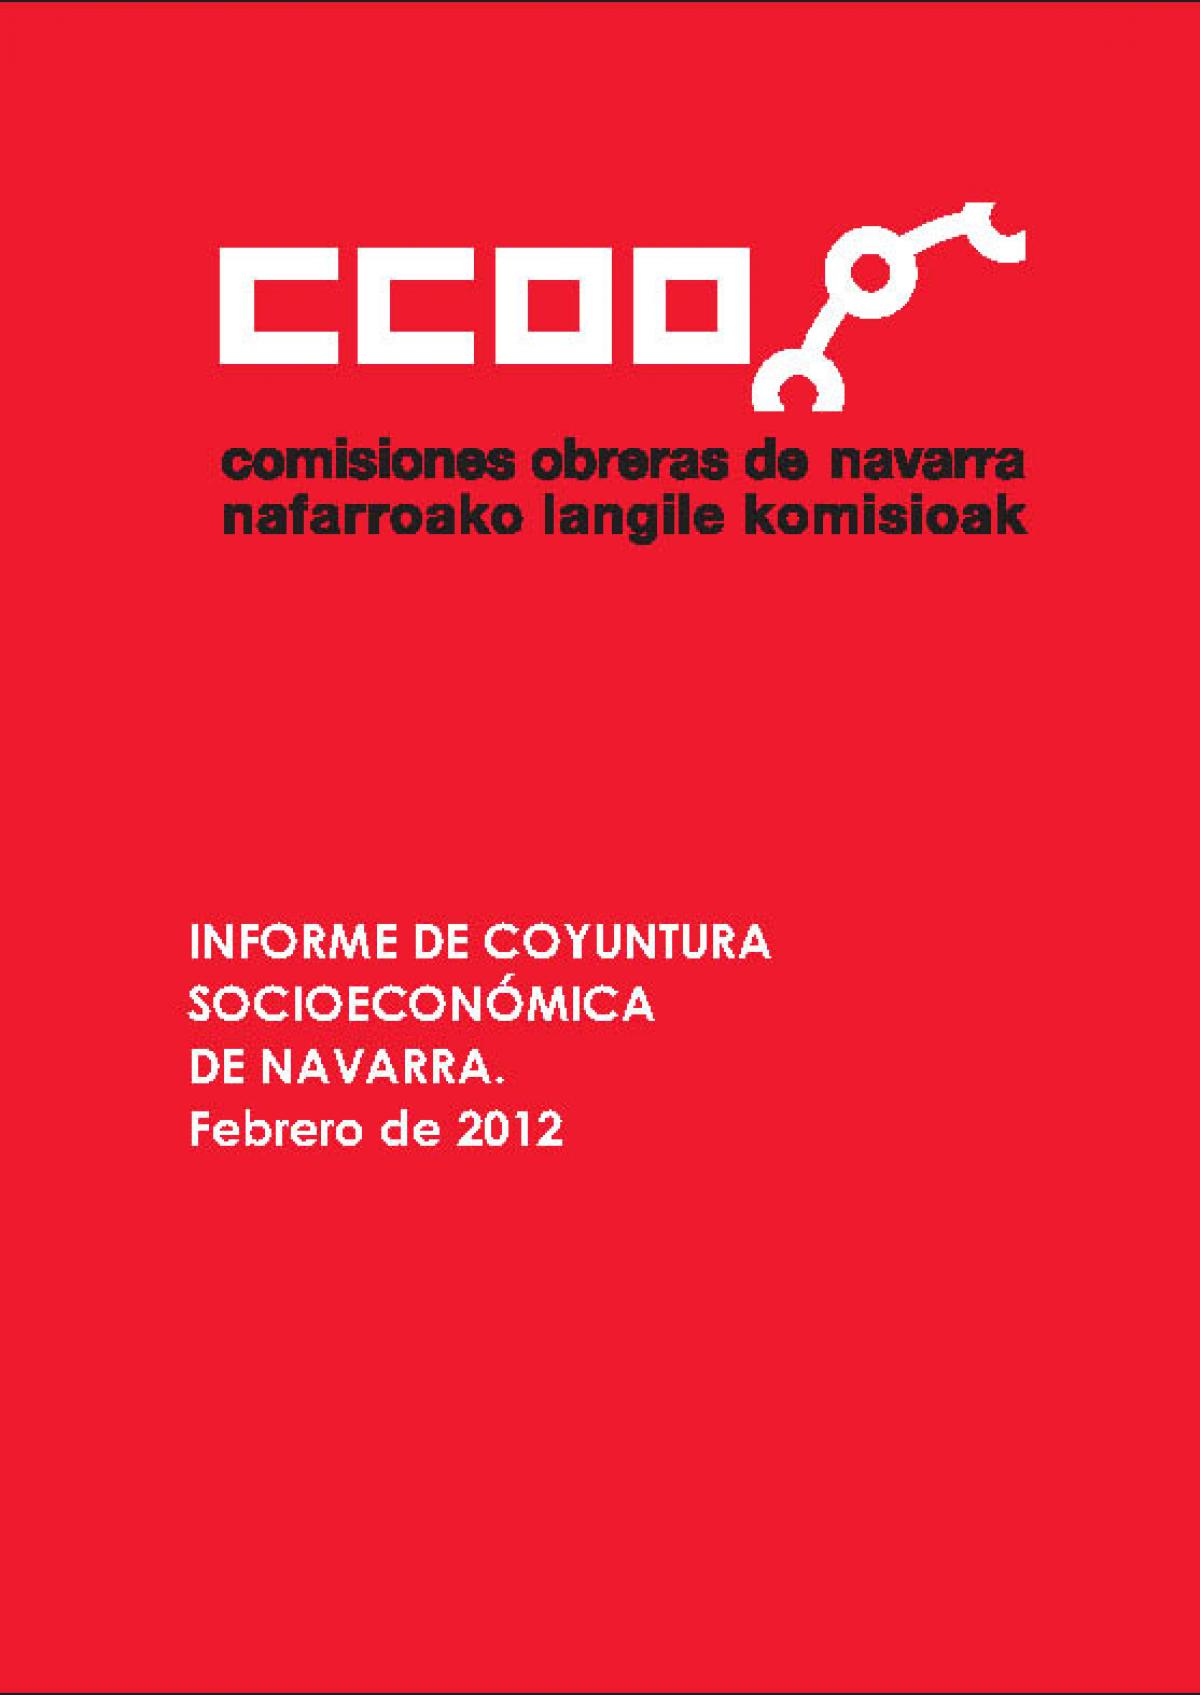 Informe de Coyuntura Socioeconmica, febero 2012